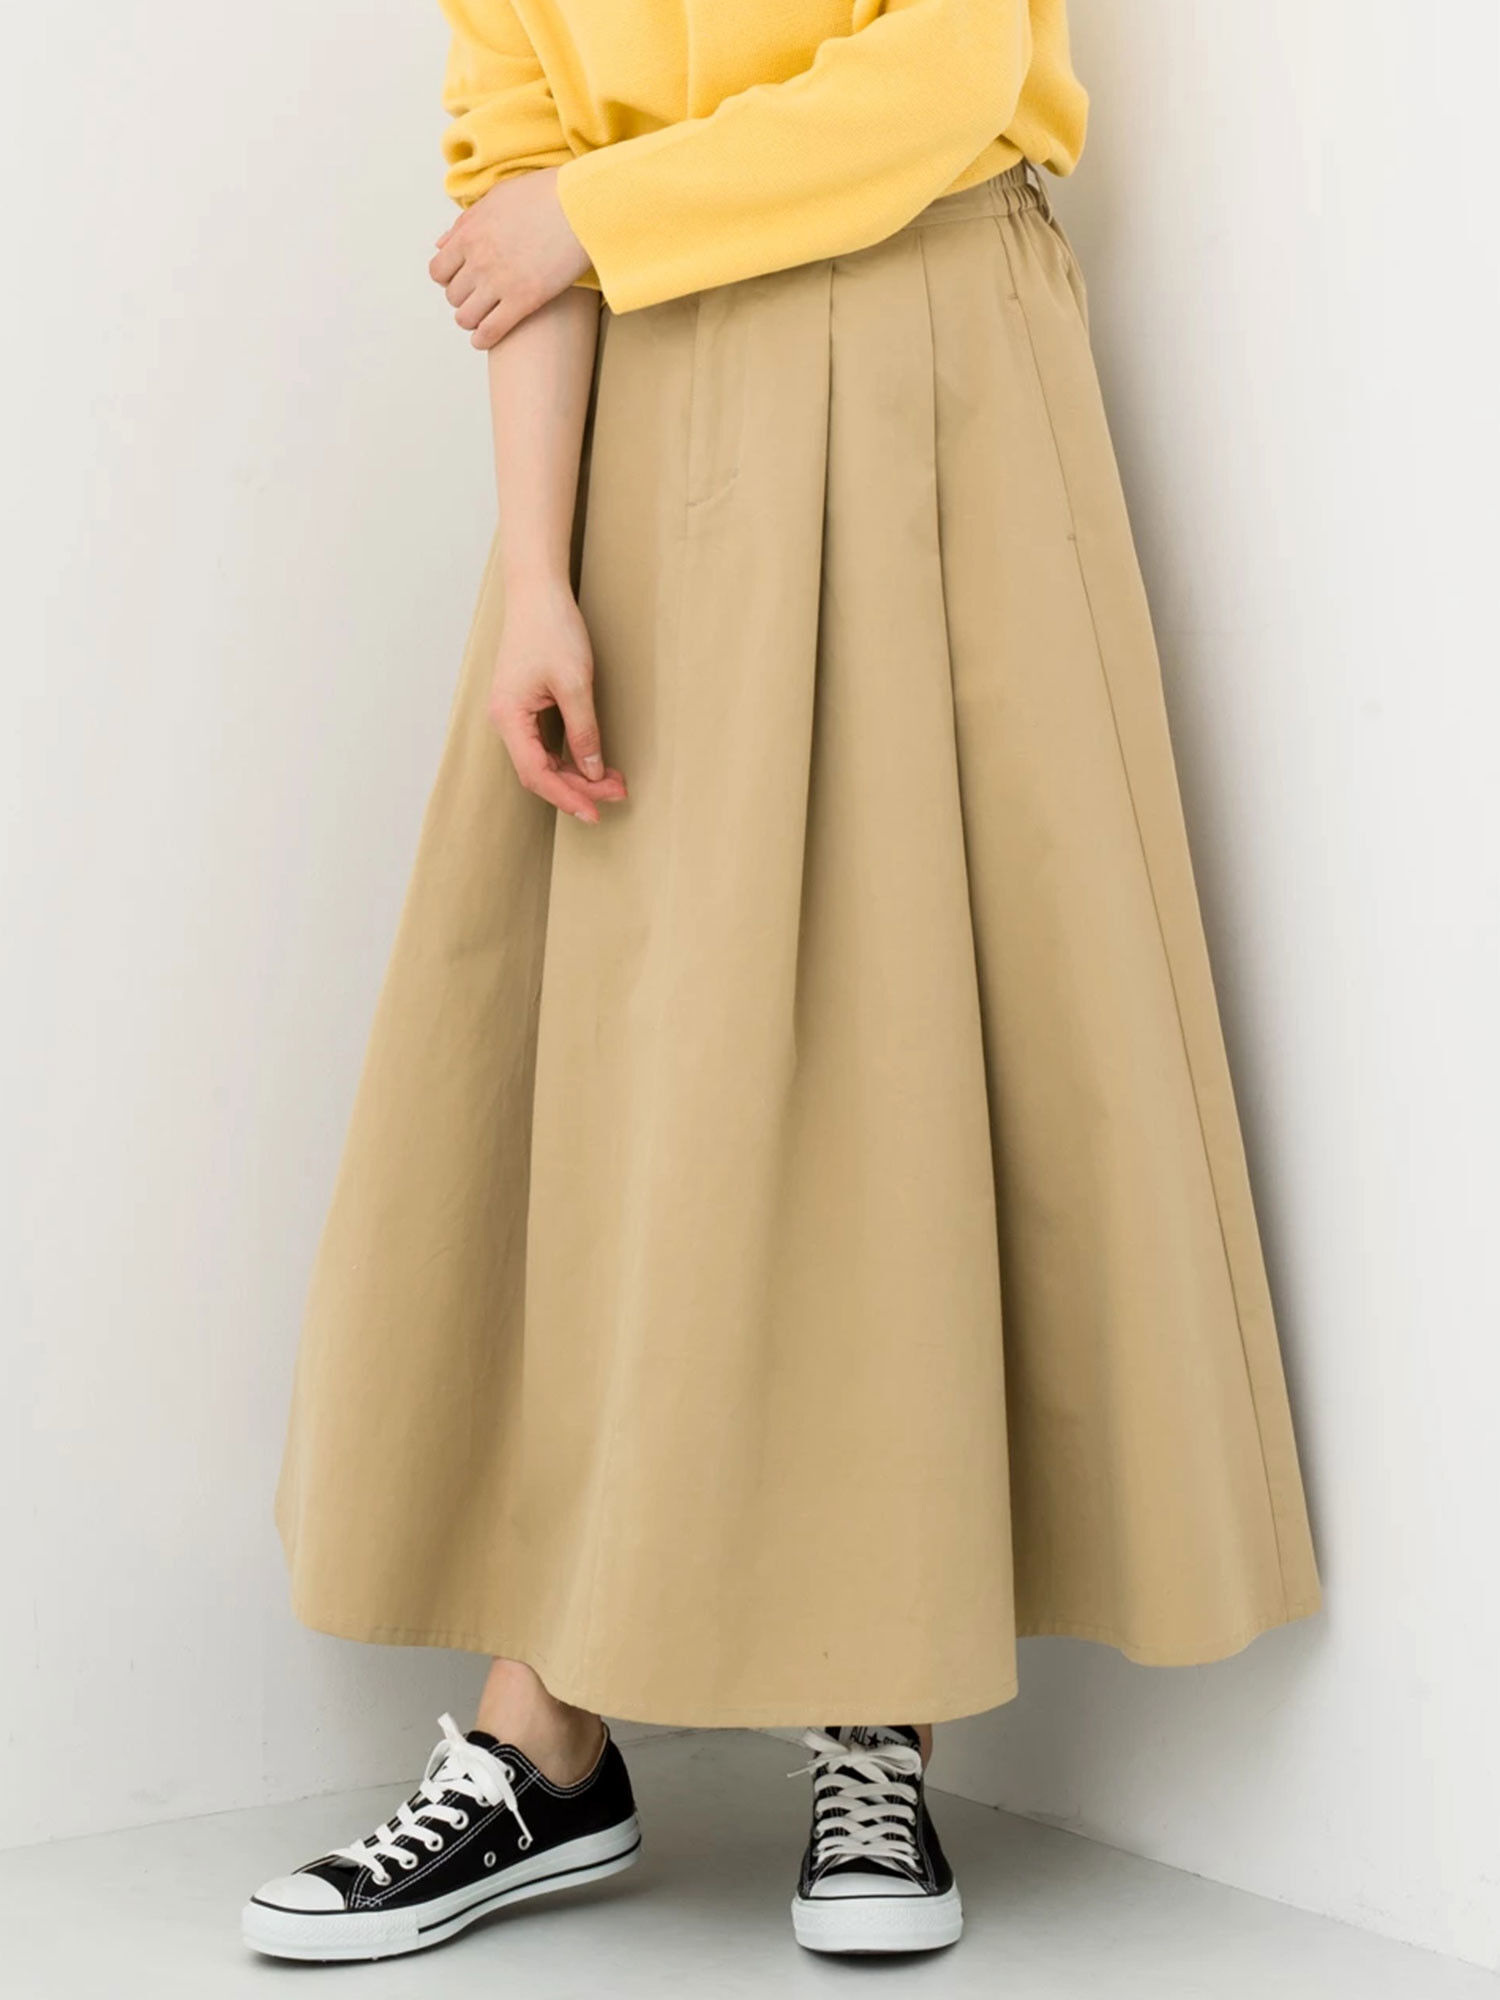 SEVENDAYSu003dSUNDAY ラップ風ギャザースカート フラワーブラック - スカート